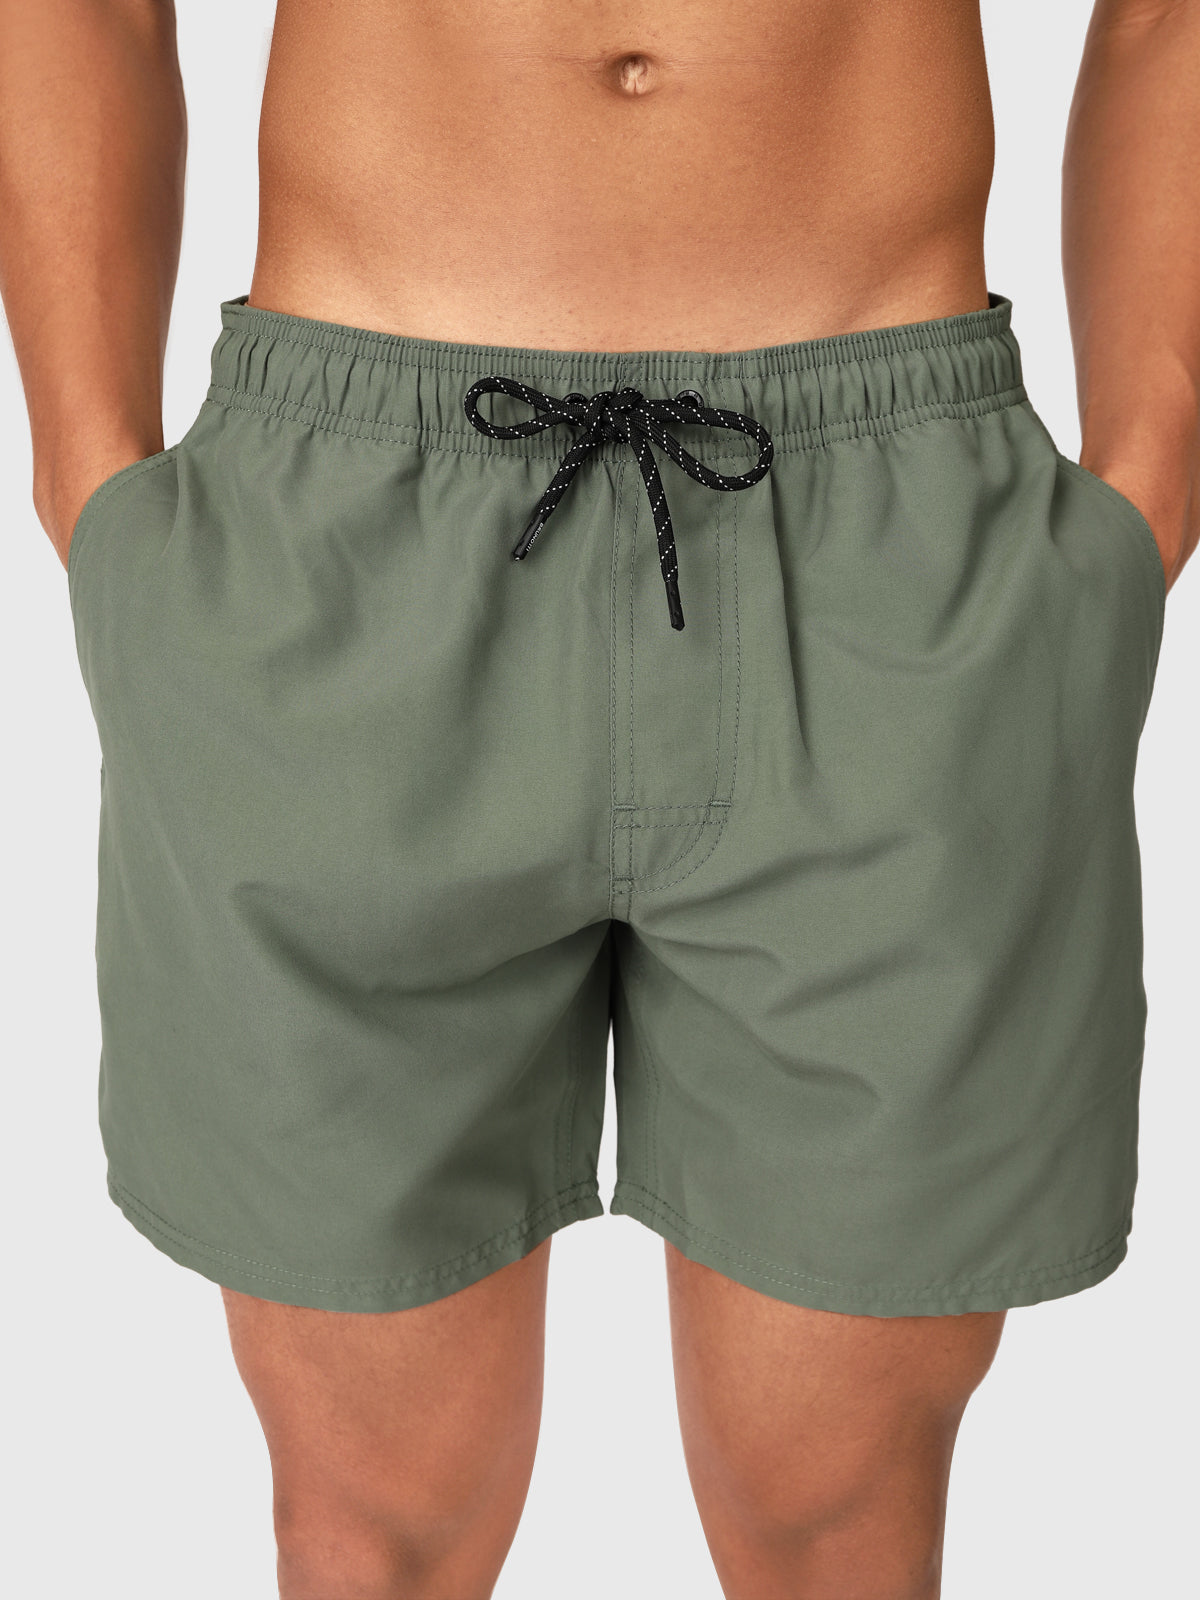 CrunECO-N Men Swim Shorts | Green